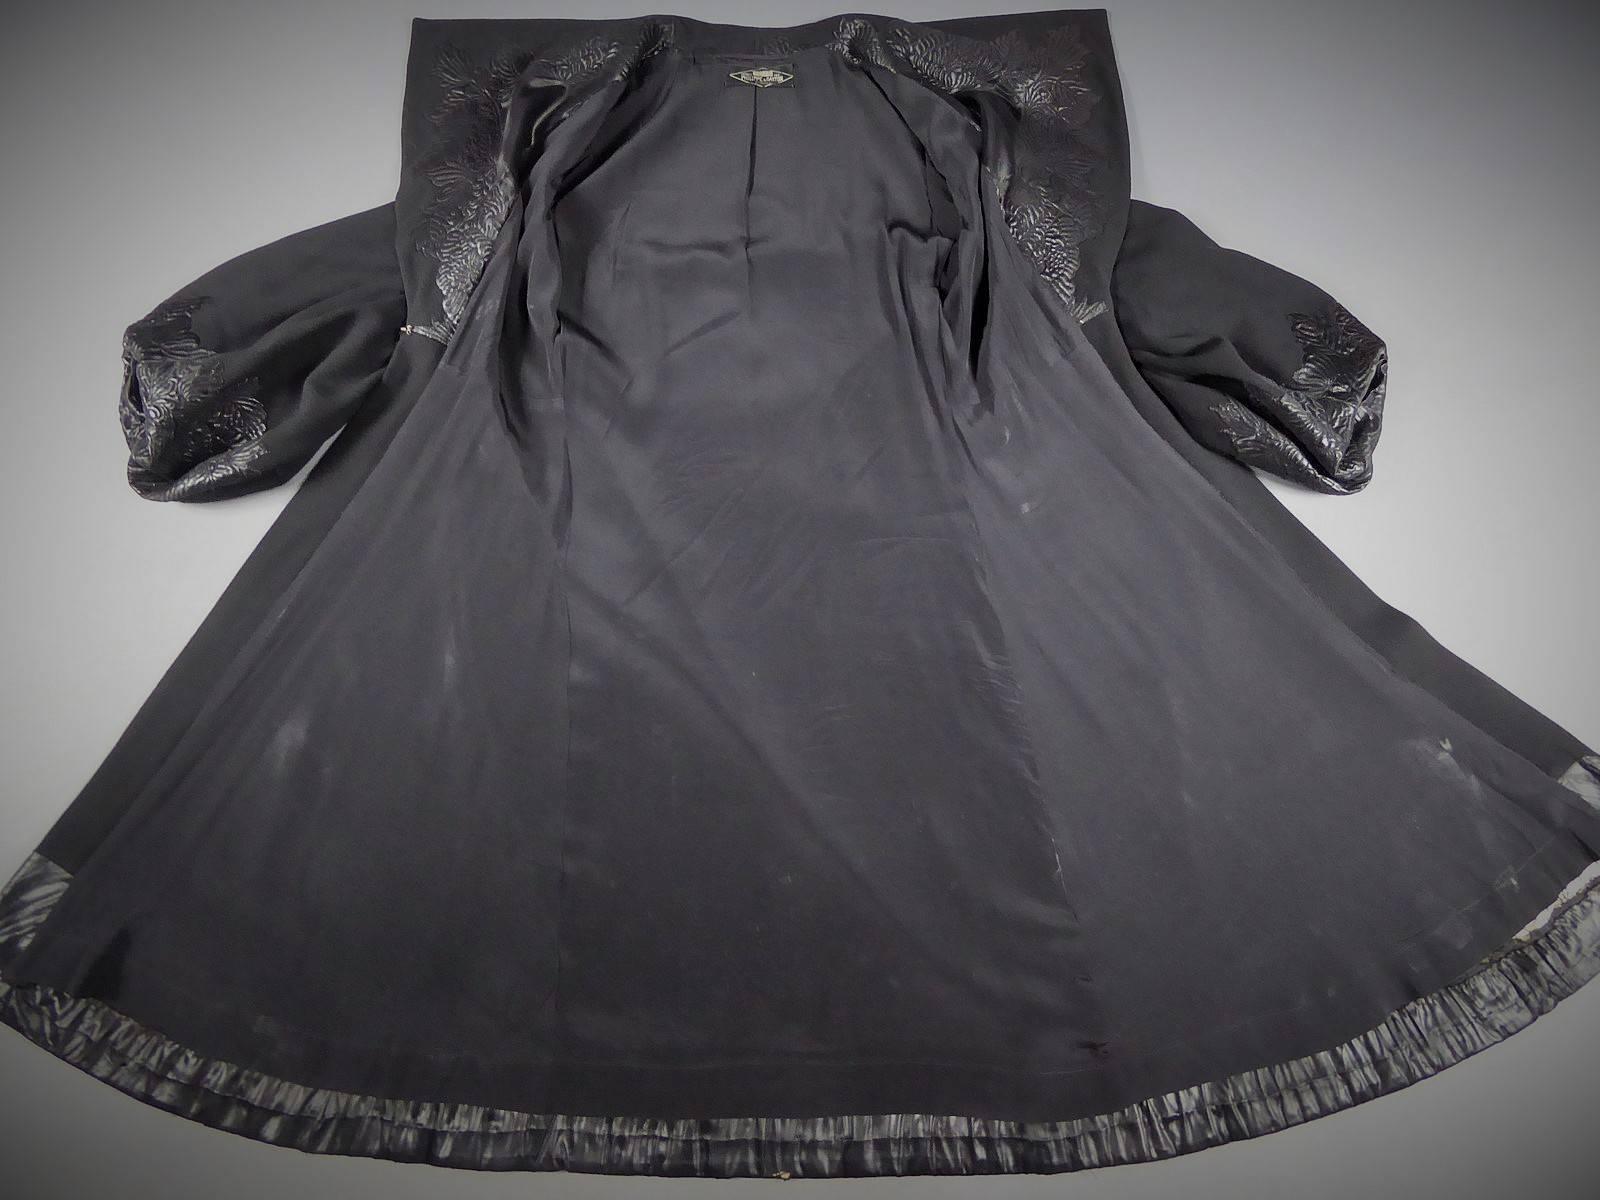 Black Haute Couture Evening Coat By Philippe et Gaston Circa 1935/40